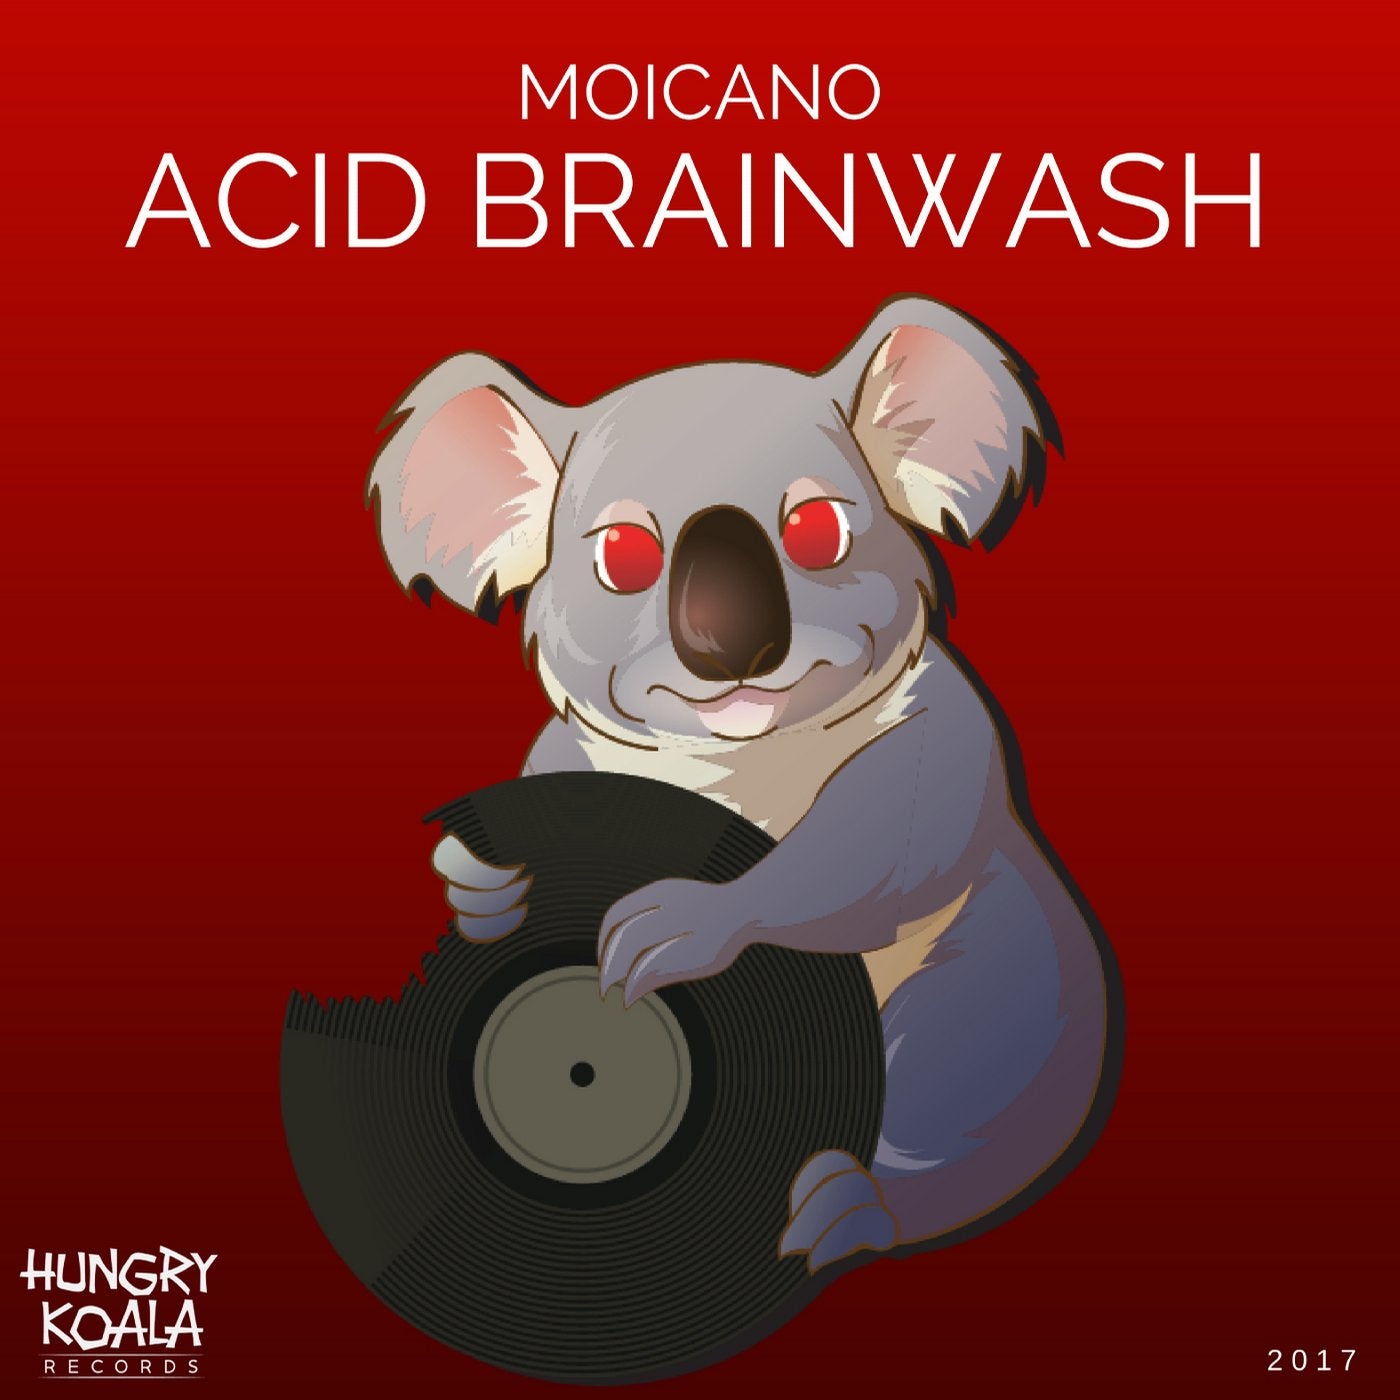 Acid Brainwash